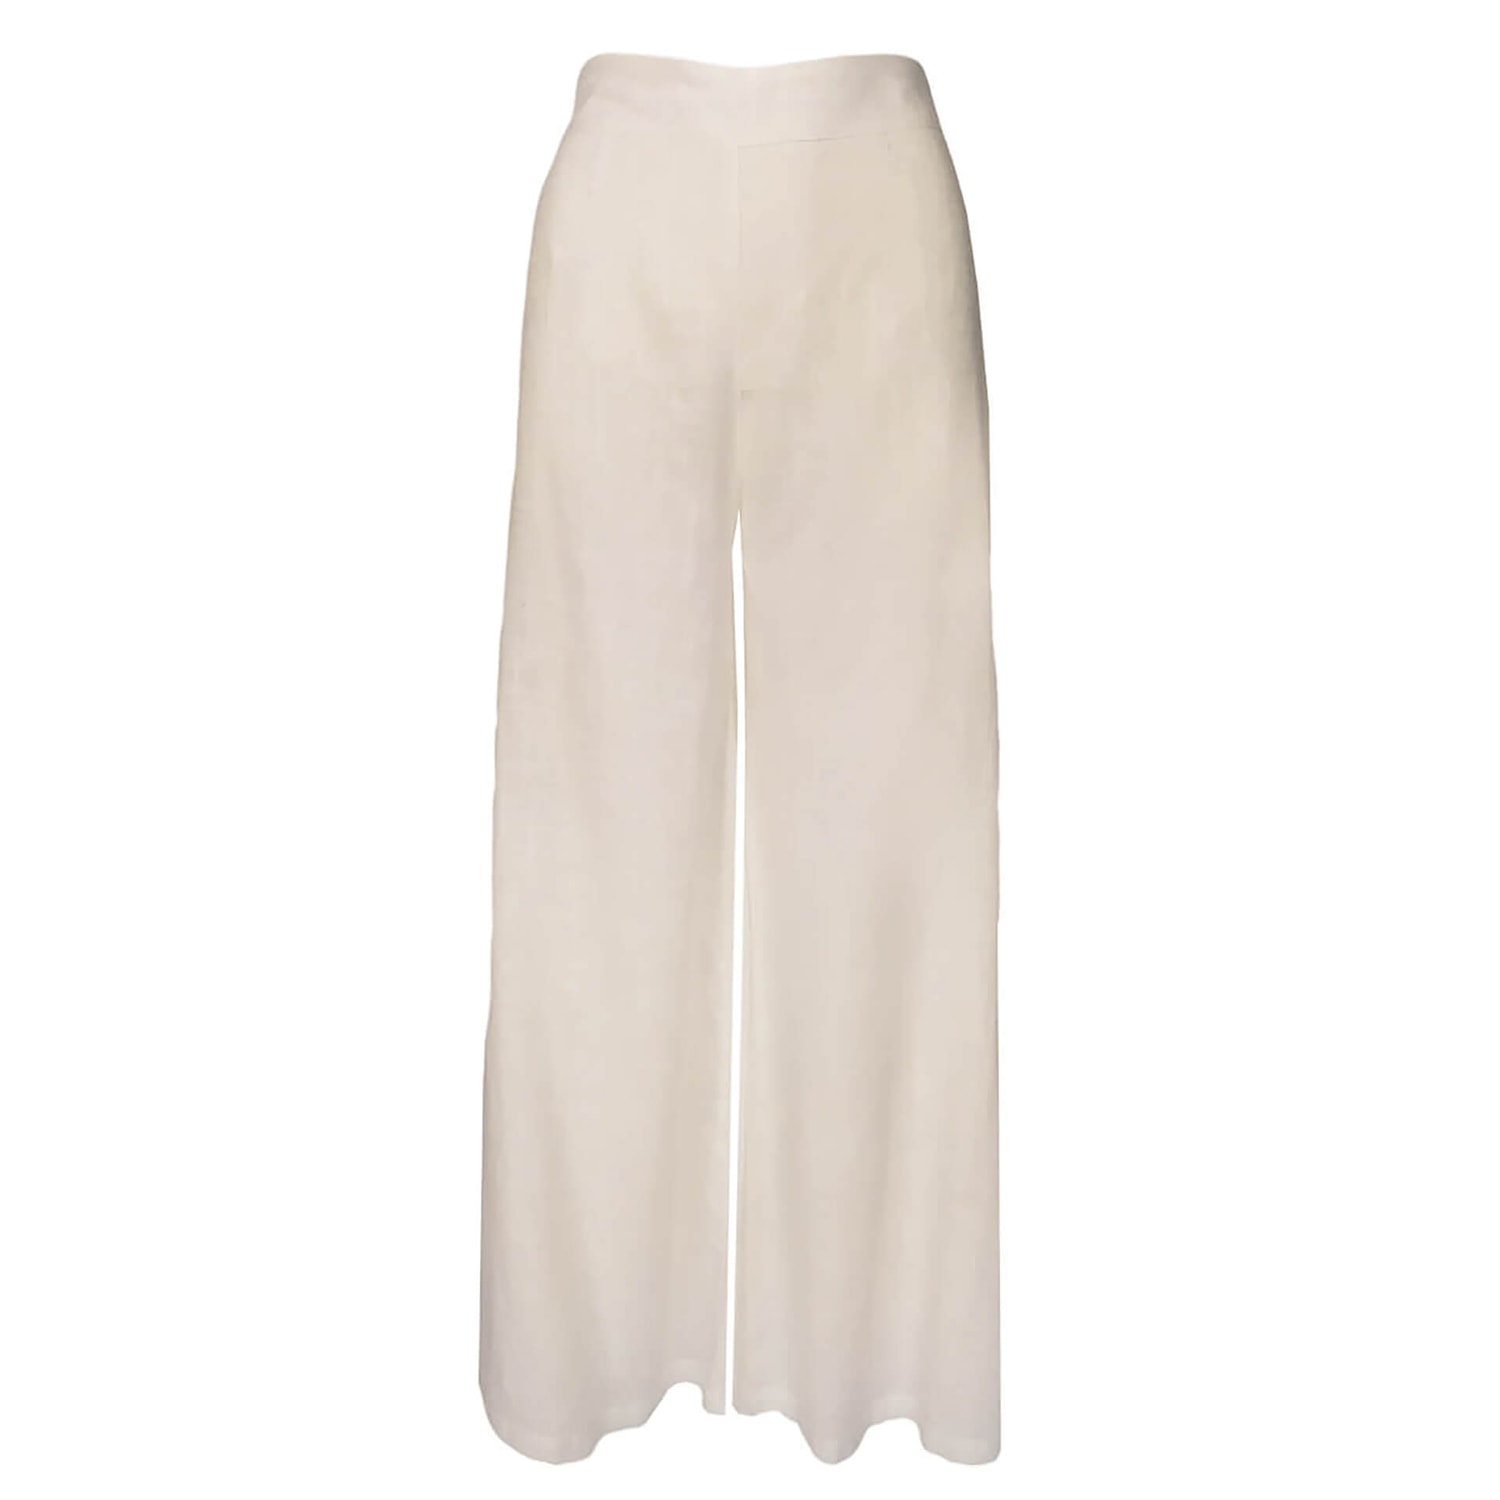 Haris Cotton Women's Solid Linen Blend Bell Bottom Pants - Off White In Neutral